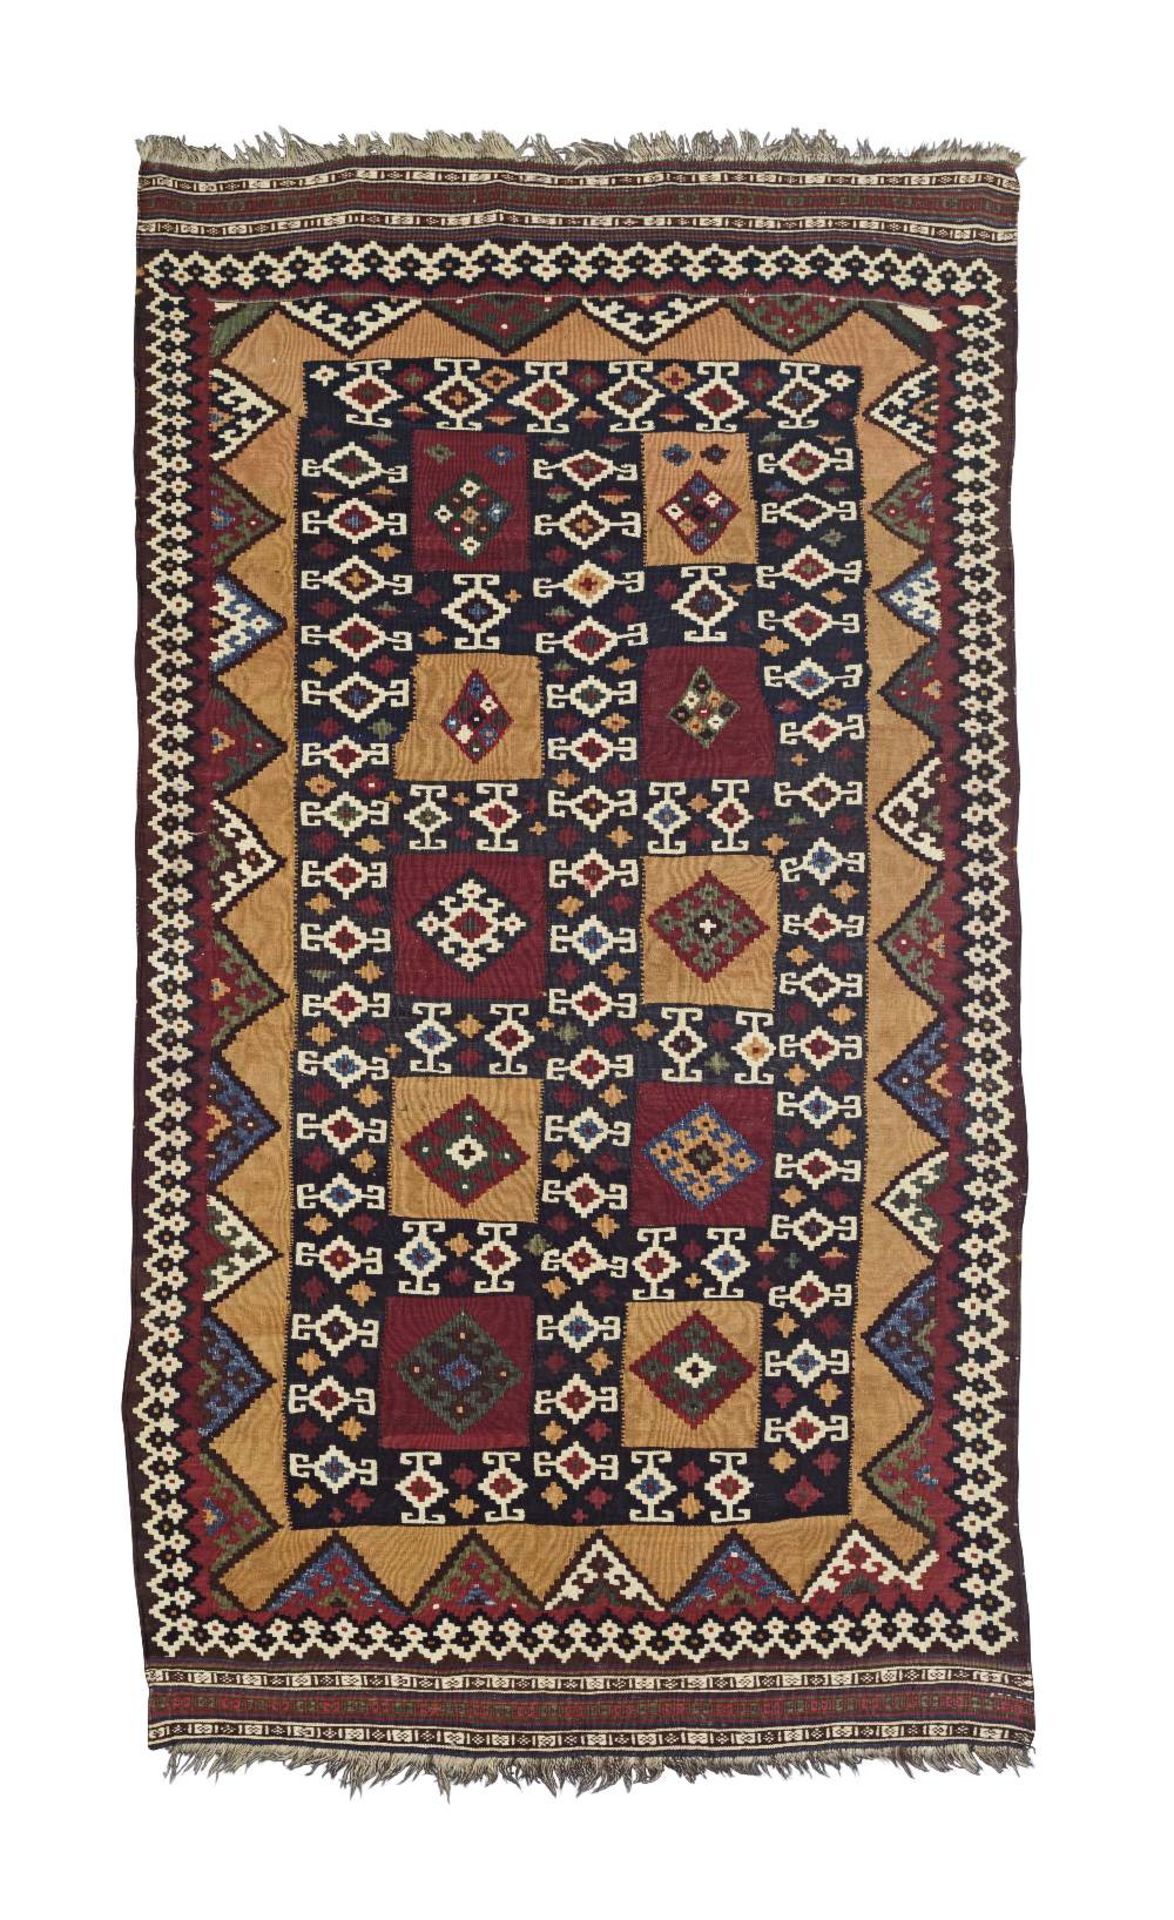 A vibrant Kilim early 20th century, West Anatolia, 250cm x 144cm